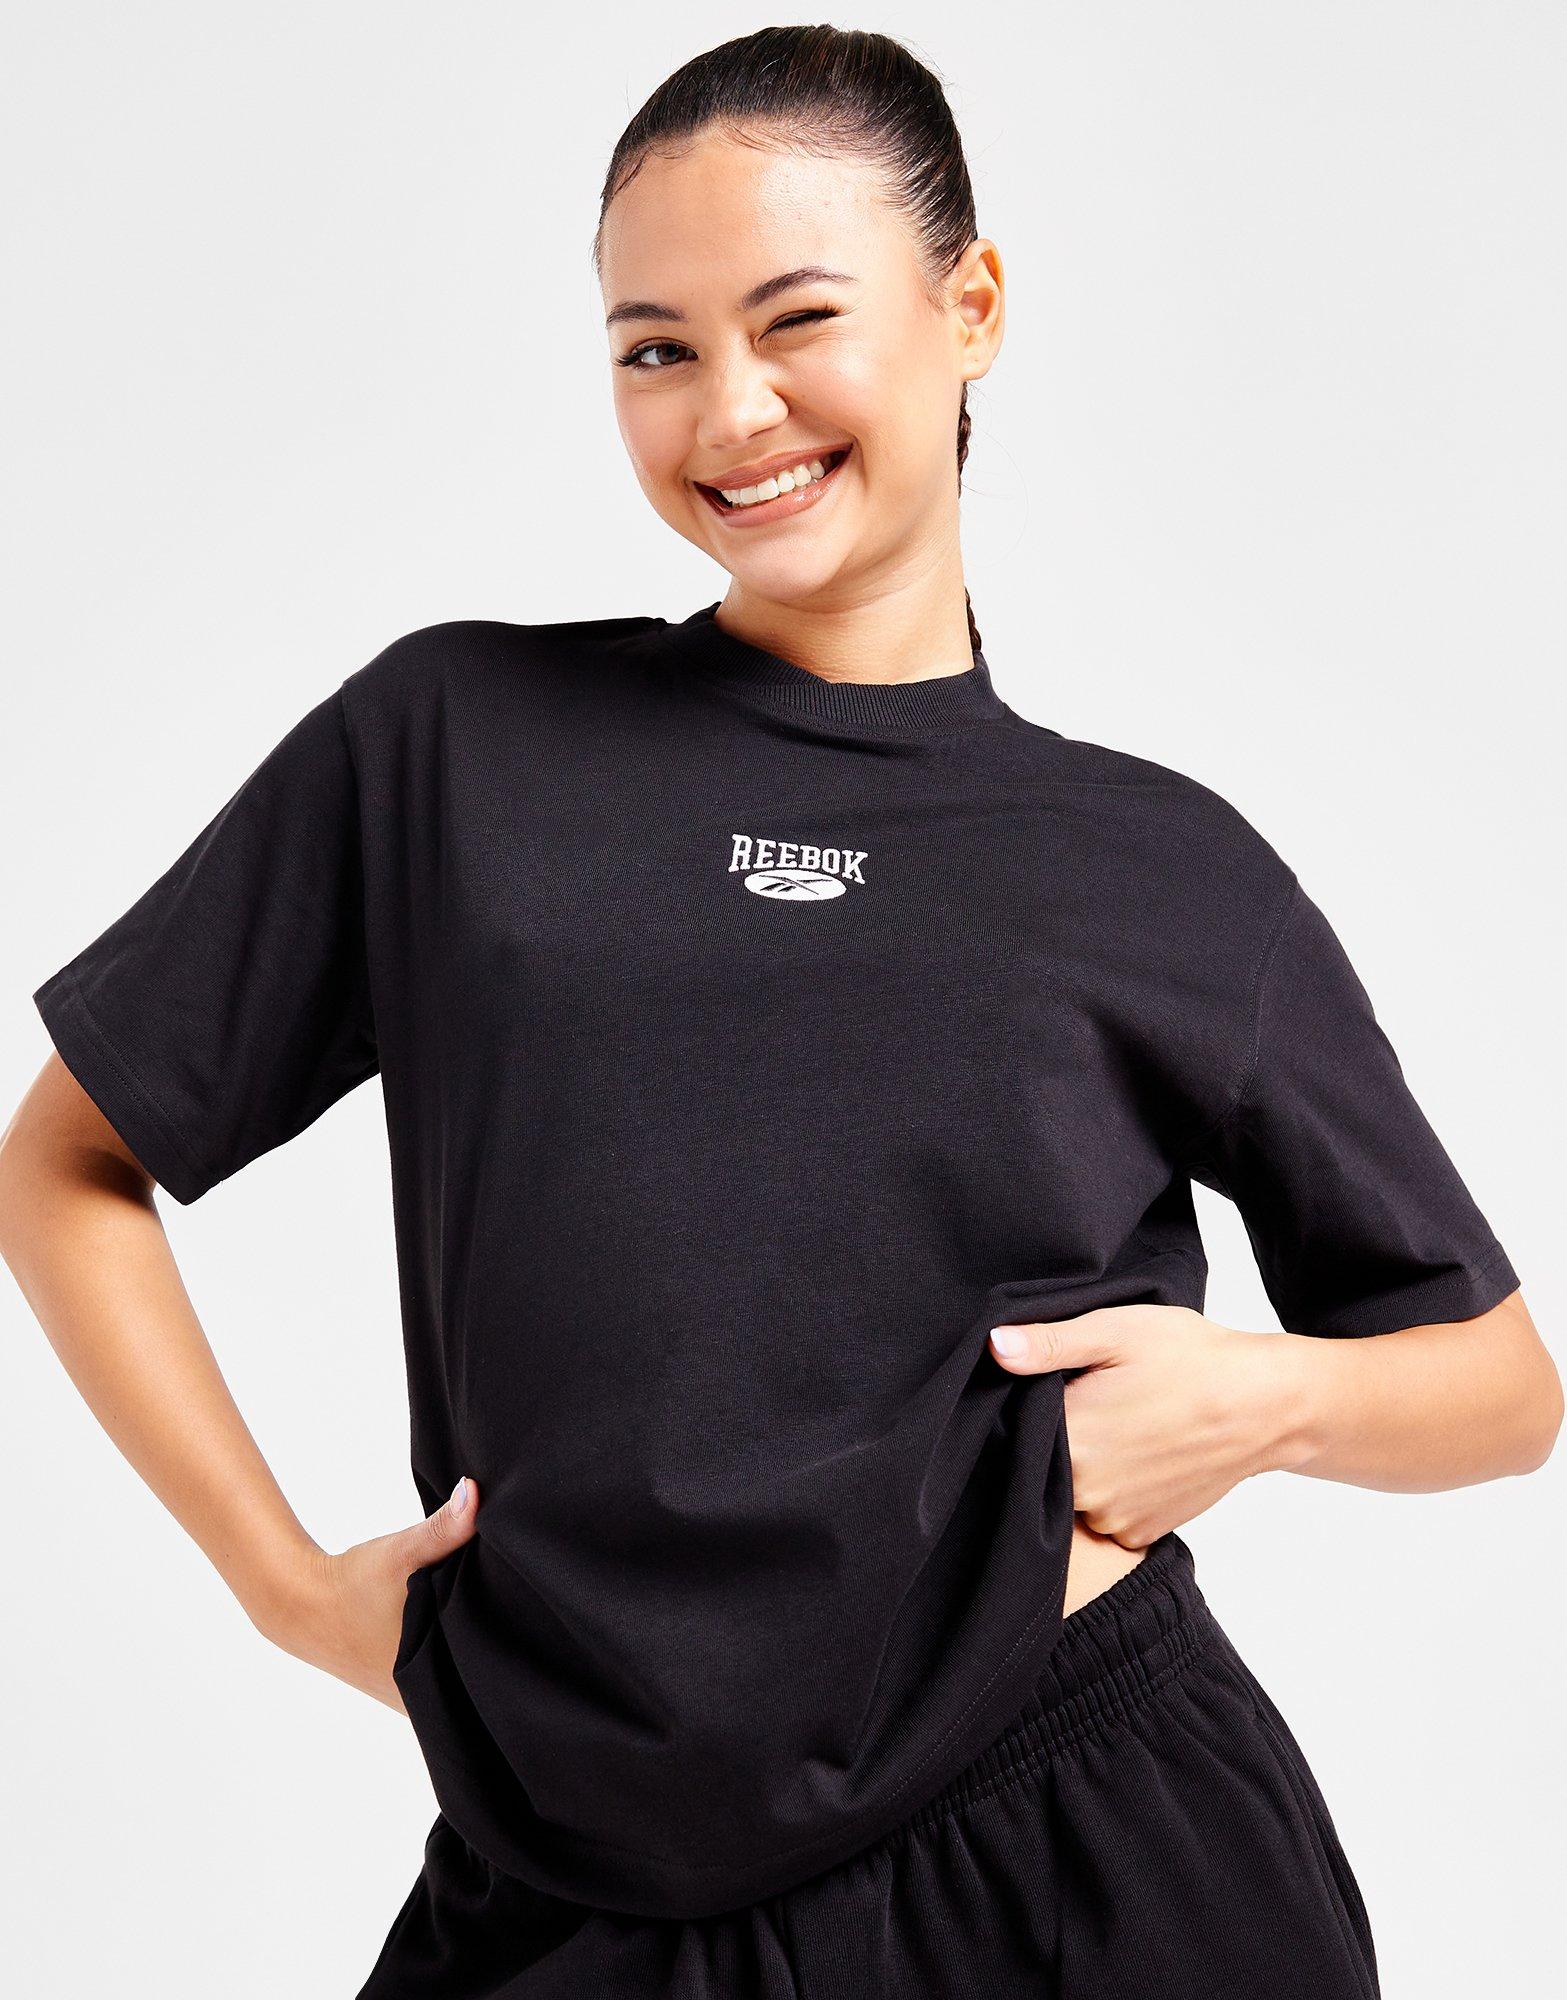 Camiseta Reebok - Negro - Camiseta Fitness Mujer, Sprinter